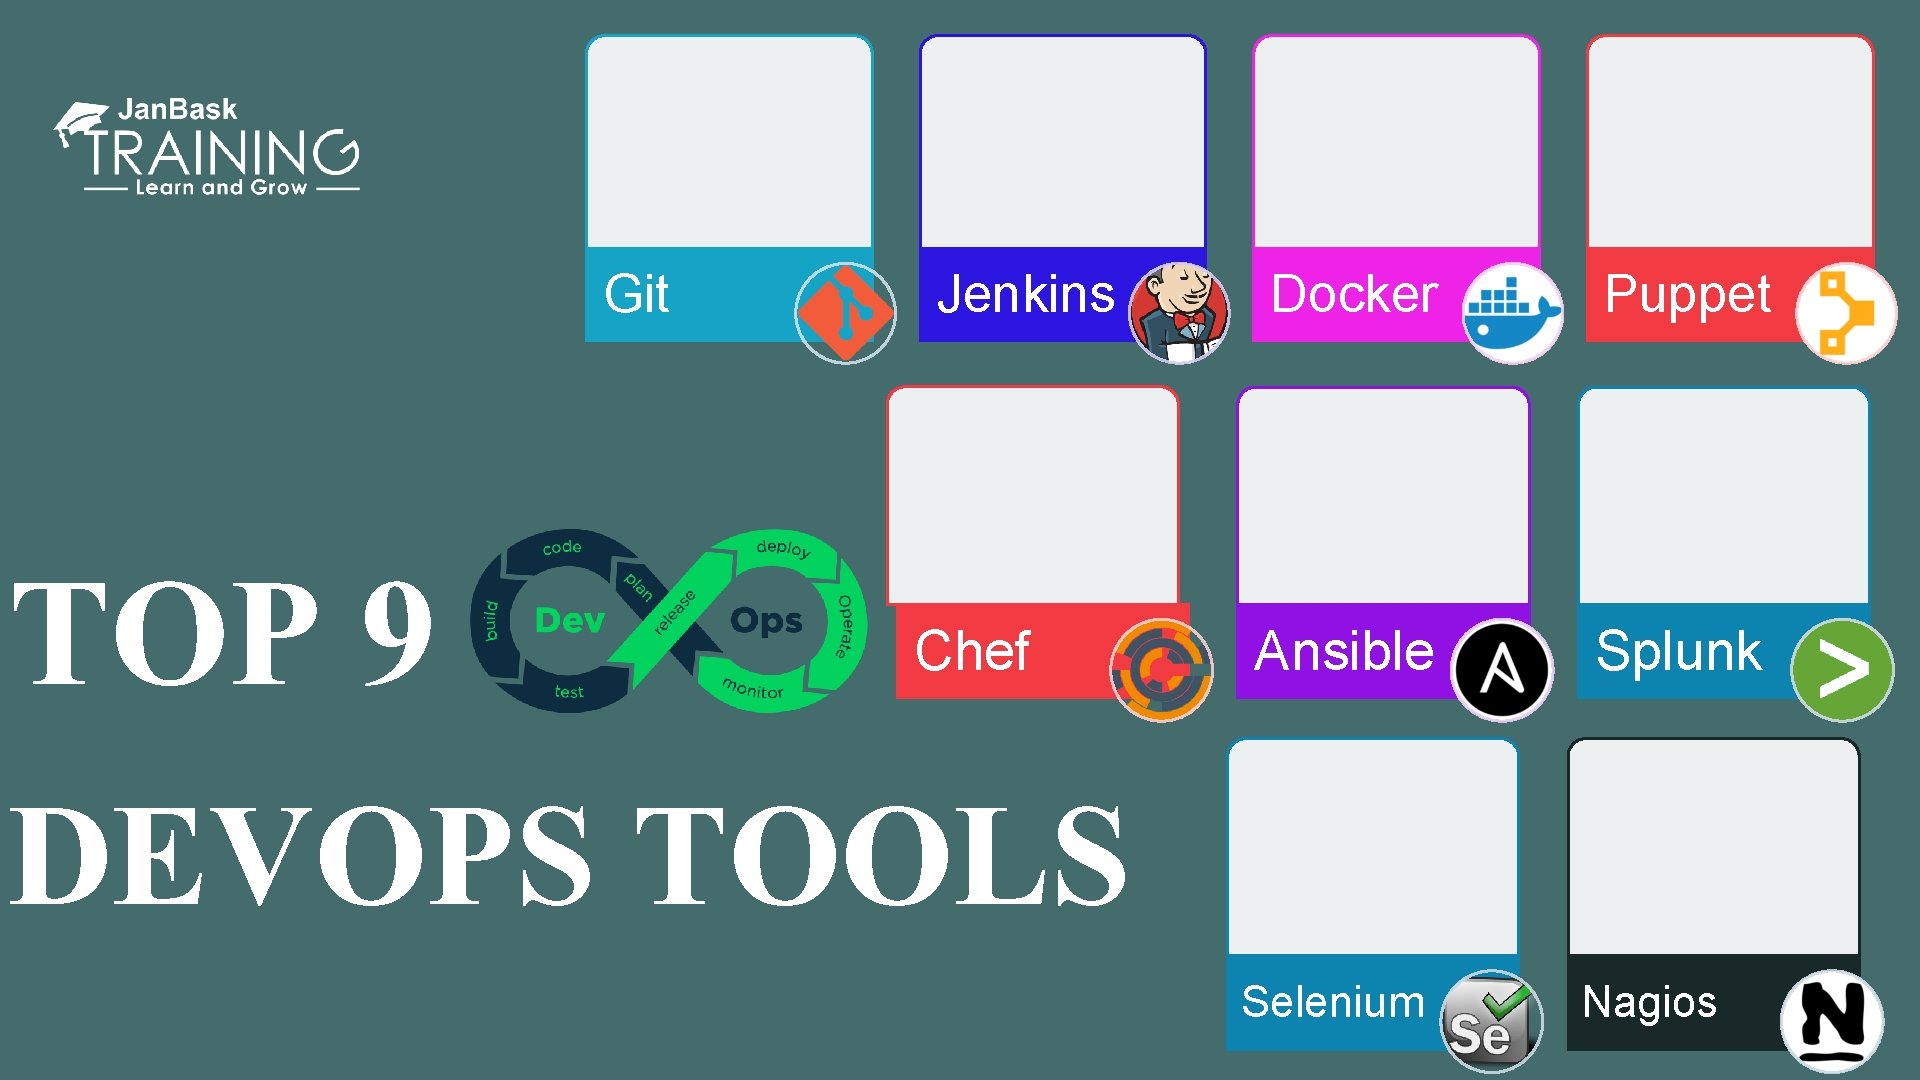 Git TOP 9 Jenkins Chef DEVOPS TOOLS Docker Puppet Ansible Splunk Selenium Nagios 